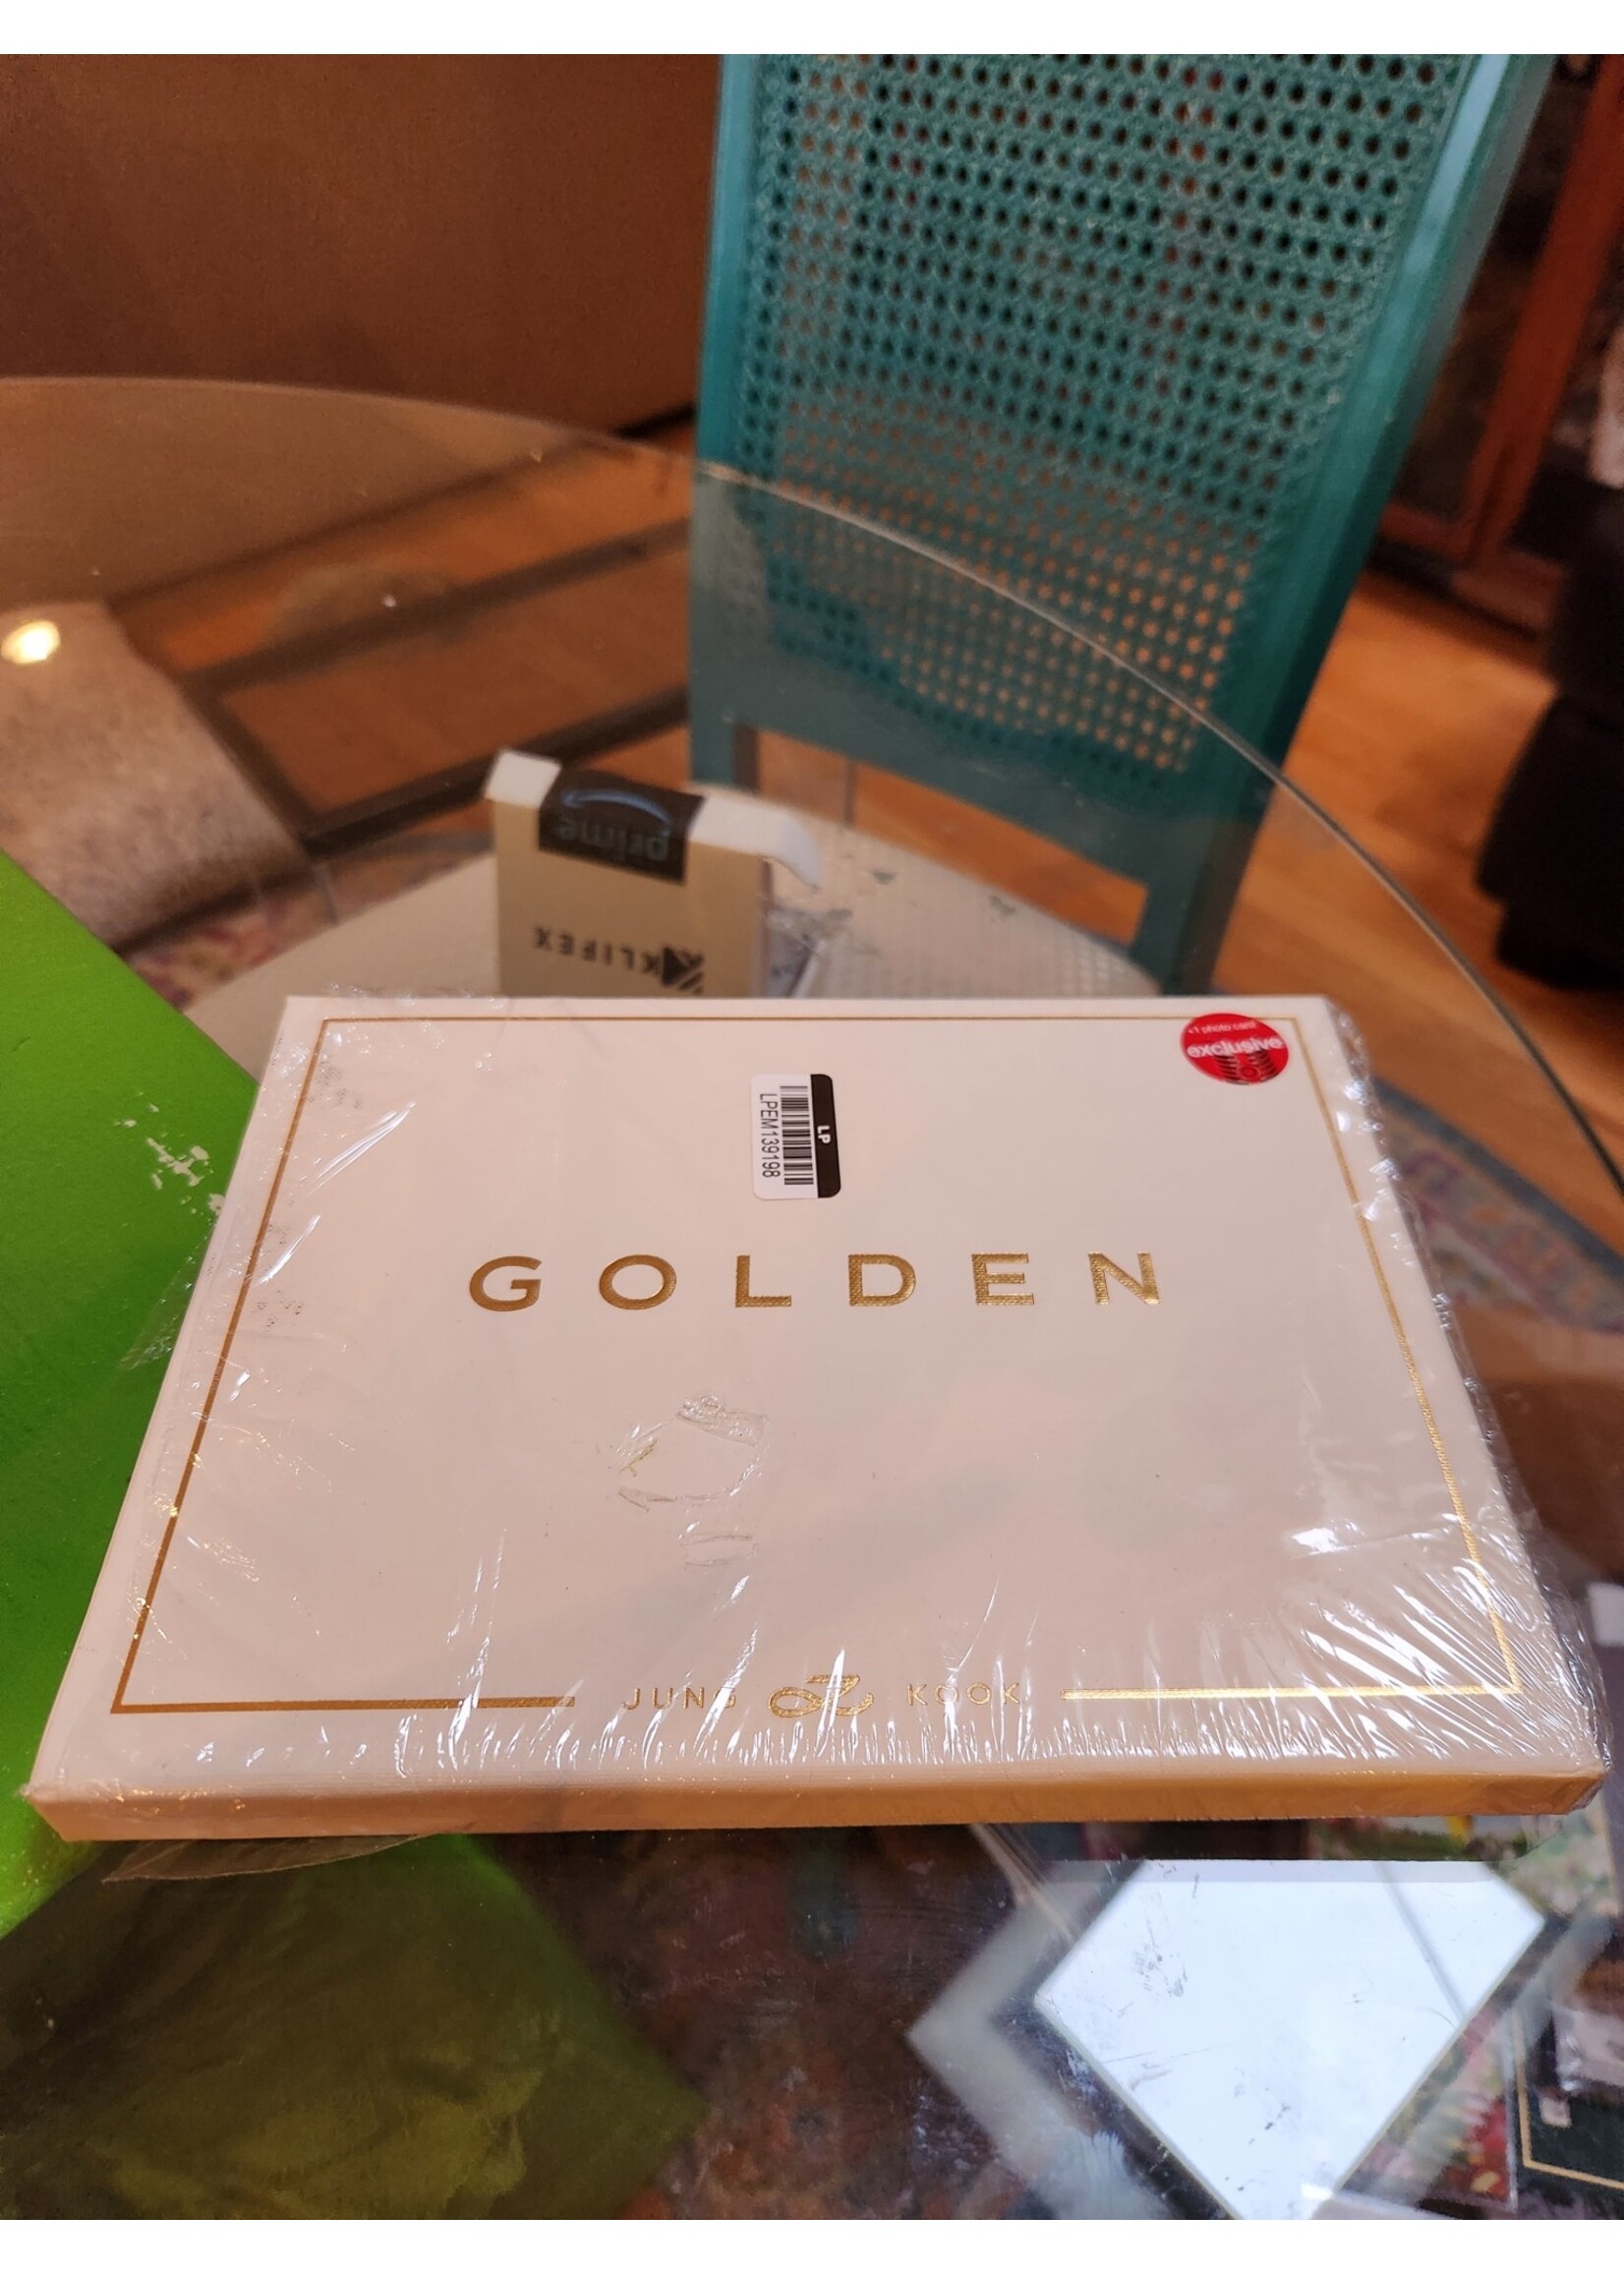 *Not Sealed* Jung Kook (BTS) CD - GOLDEN (Target Exclusive) White or Green Color Varies